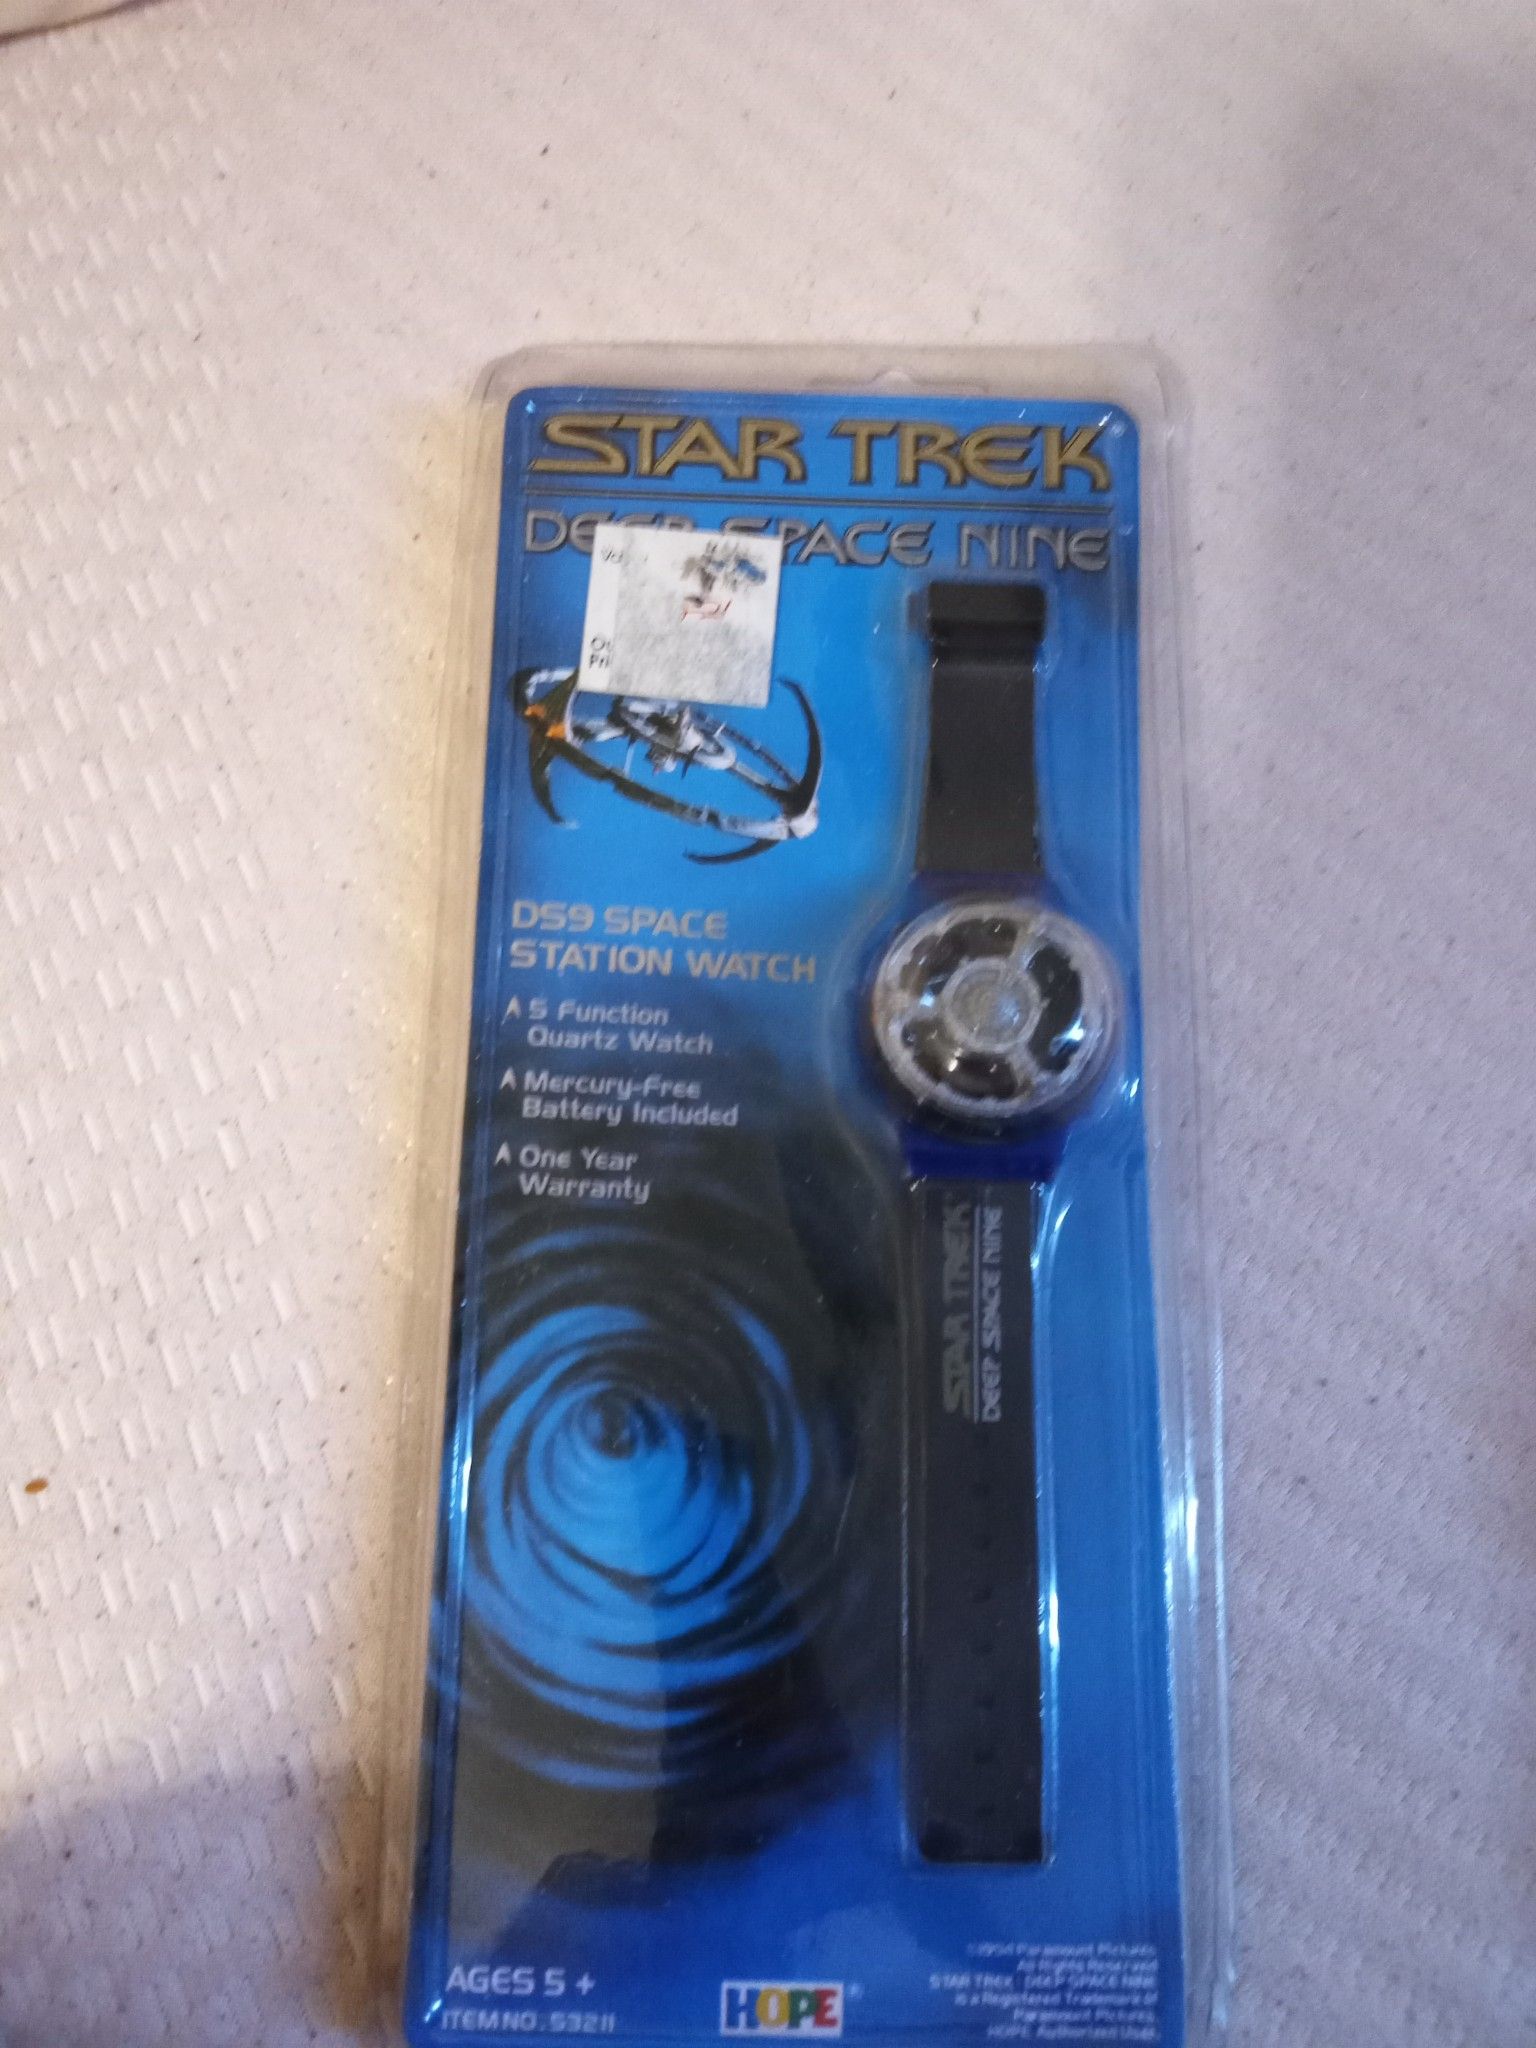 Star Trek Watch price: $15.00